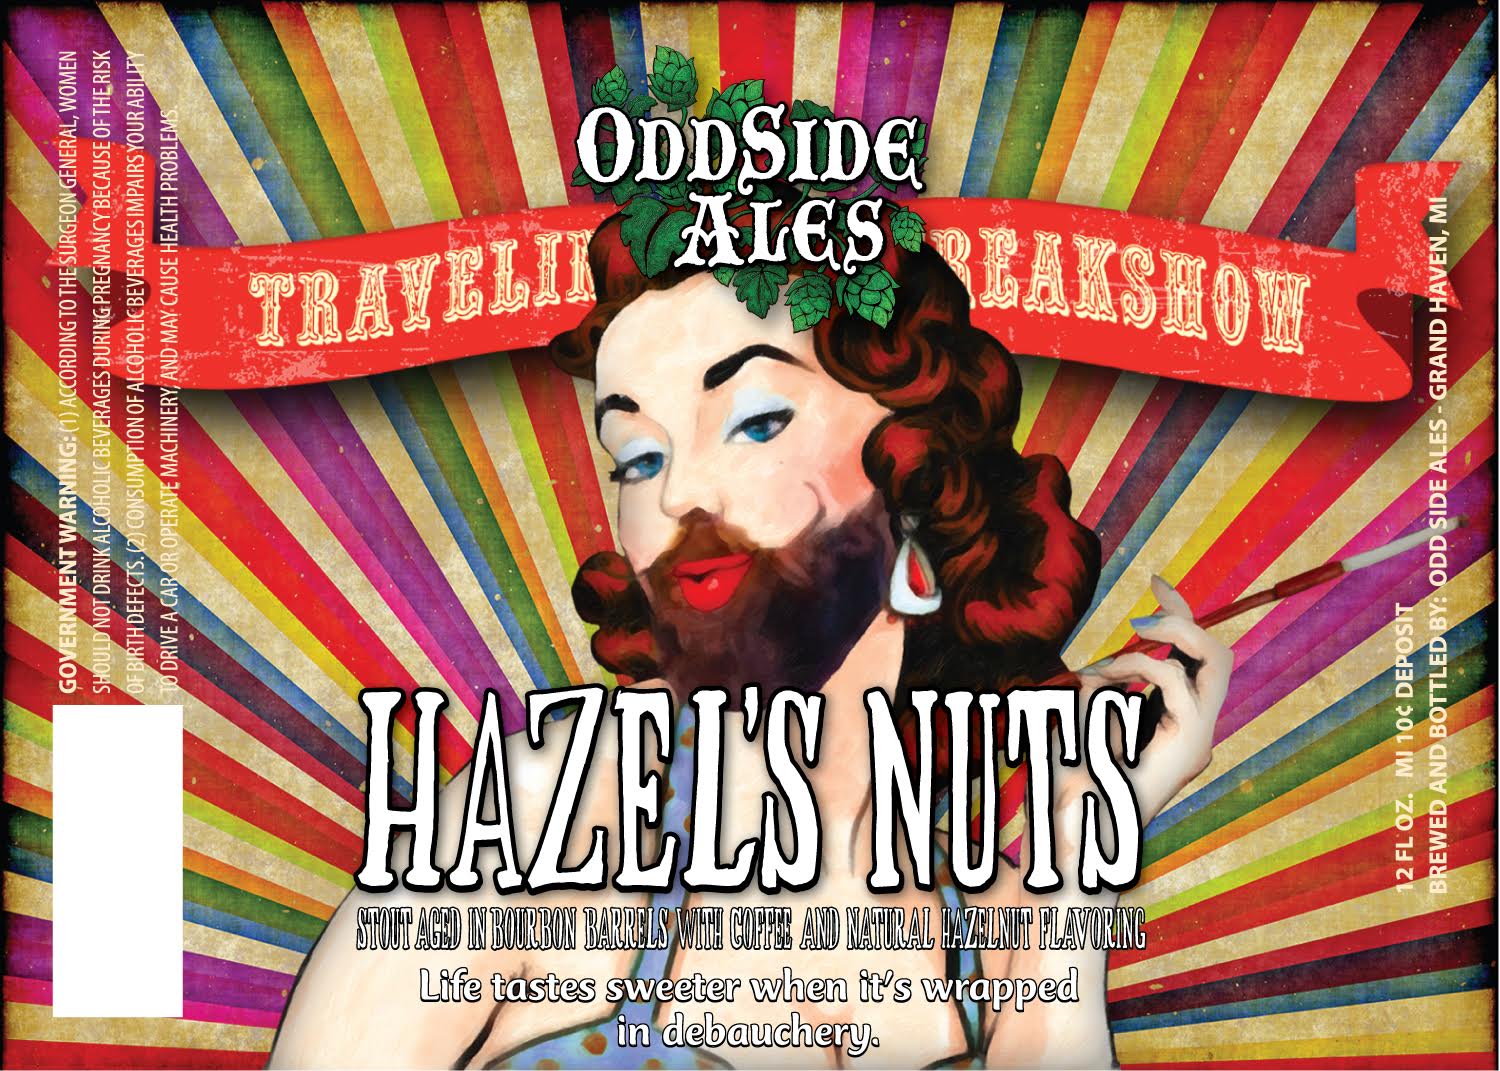 Oddside Ales Hazel's Nuts